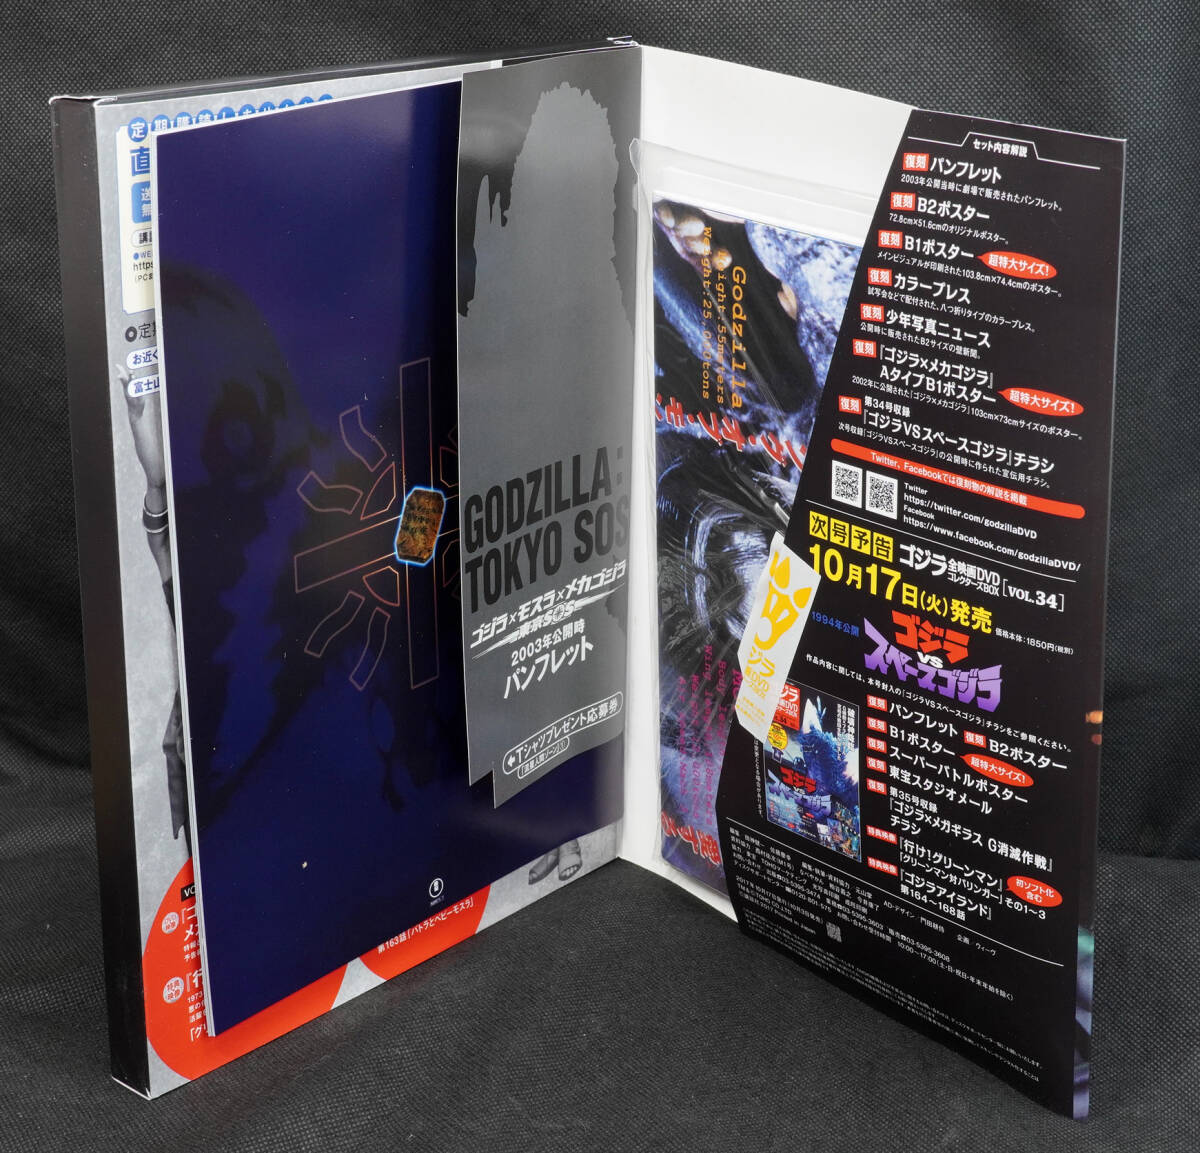 *33 Godzilla X Mothra X Mechagodzilla Tokyo SOS 2003 Godzilla all movie DVD collectors BOX DVD appendix completion goods 